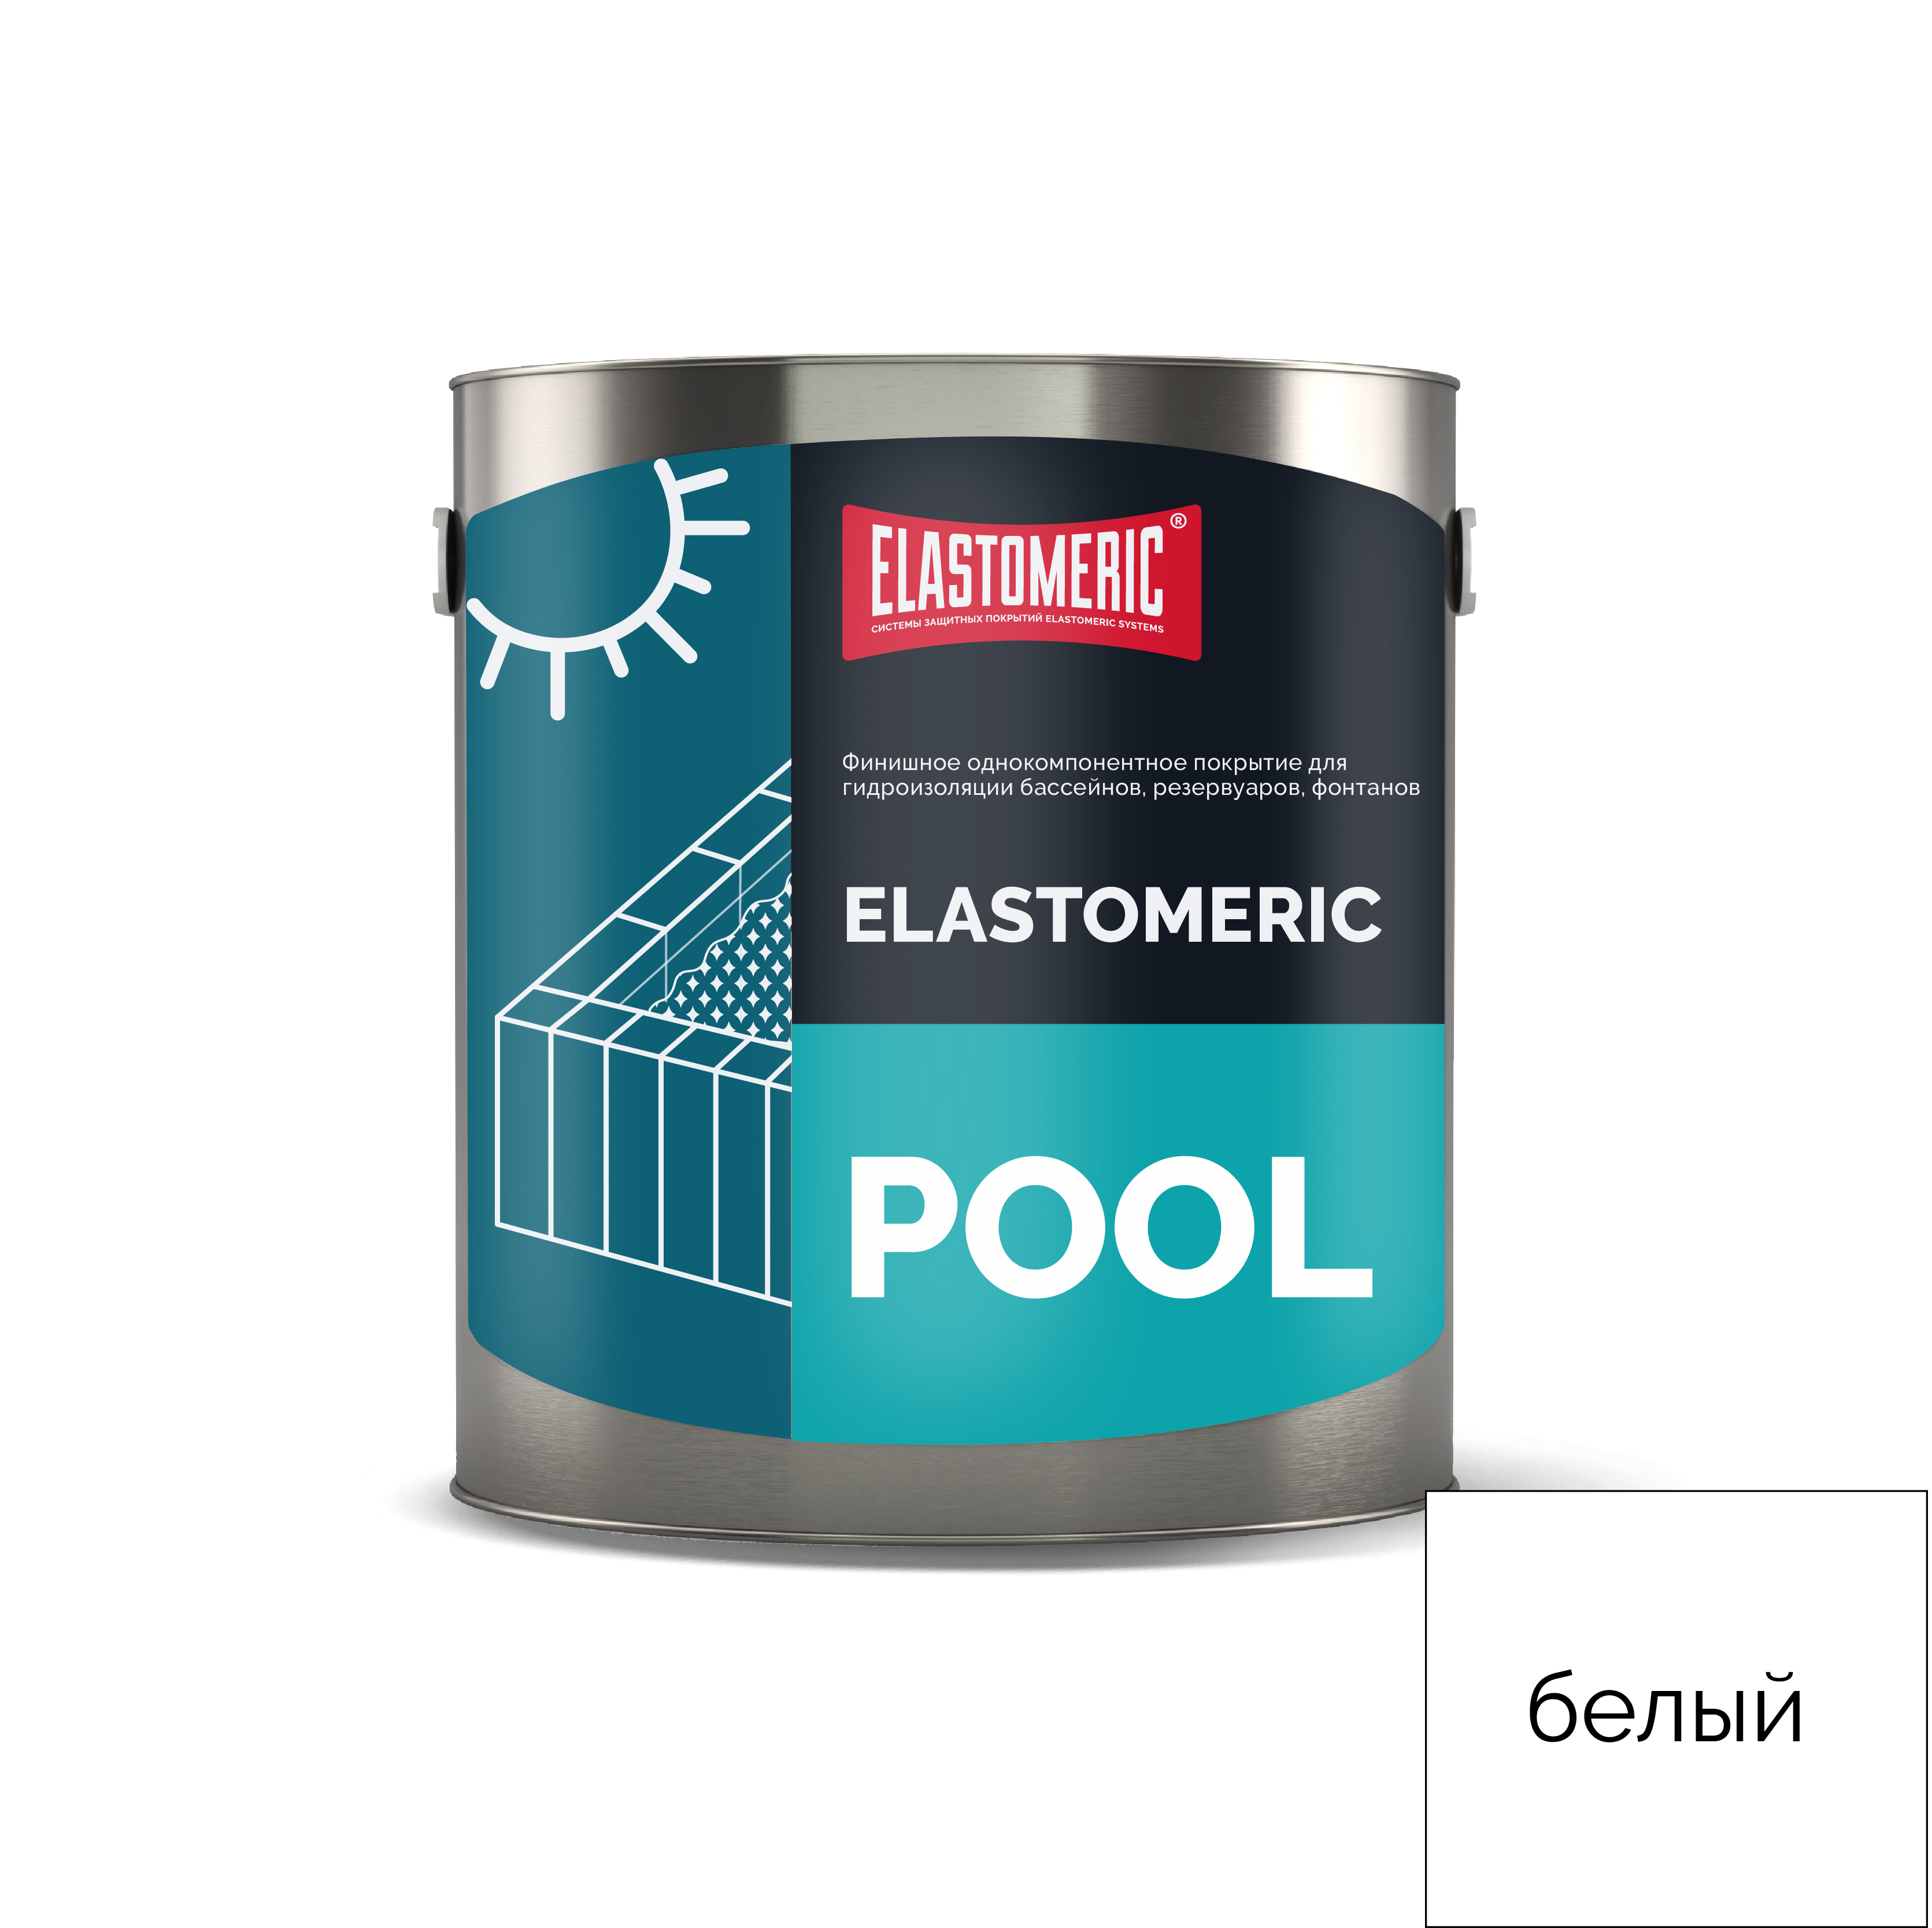 фото Гидроизоляция для бассейна elastomeric pool 3кг., elastomeric systems